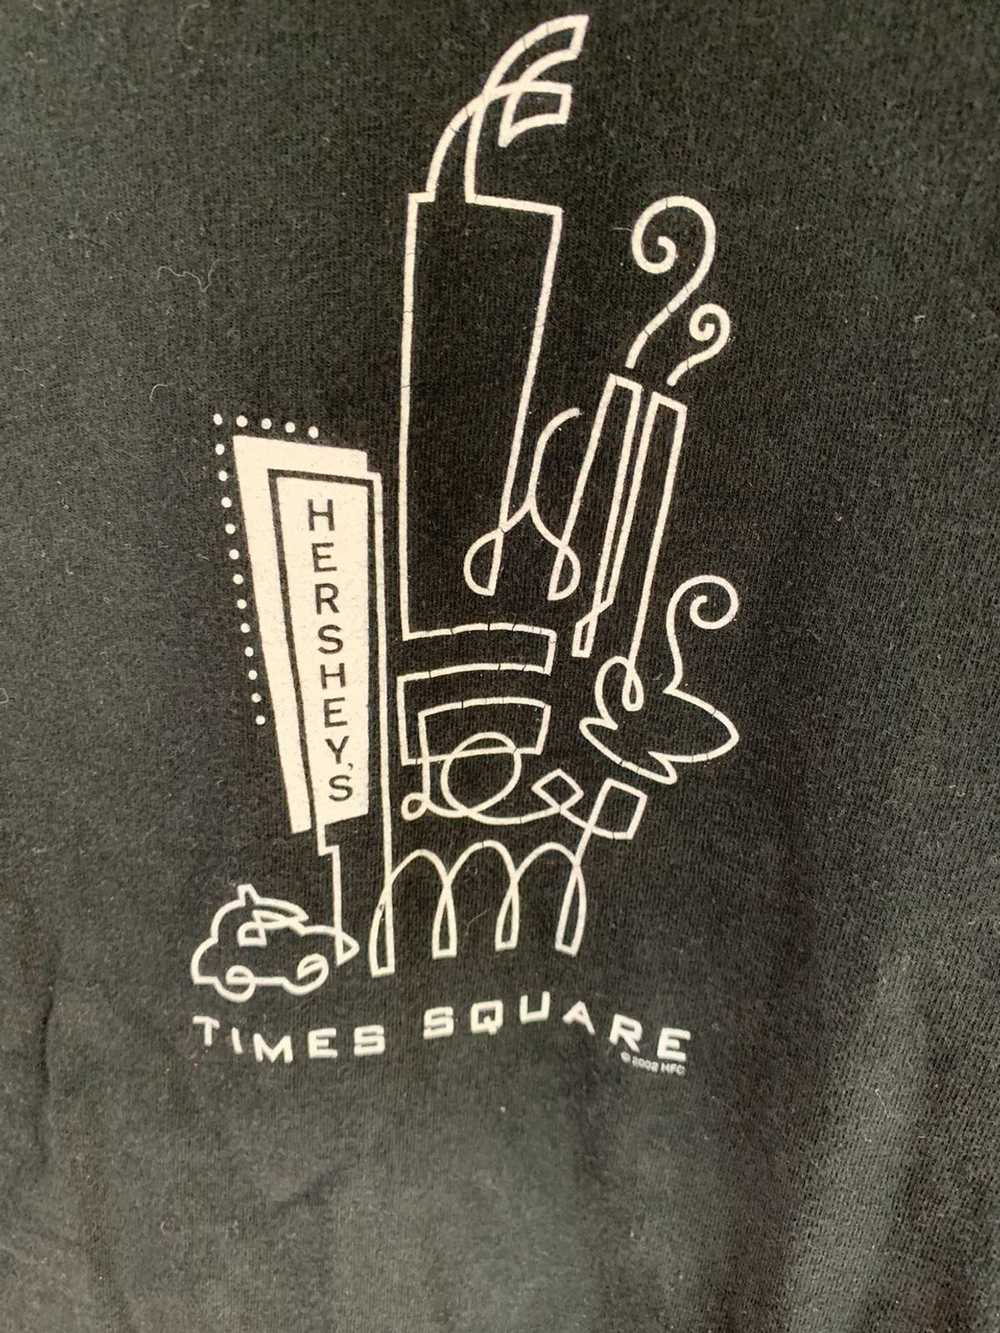 Vintage 2002 Time Square T-shirt - image 2